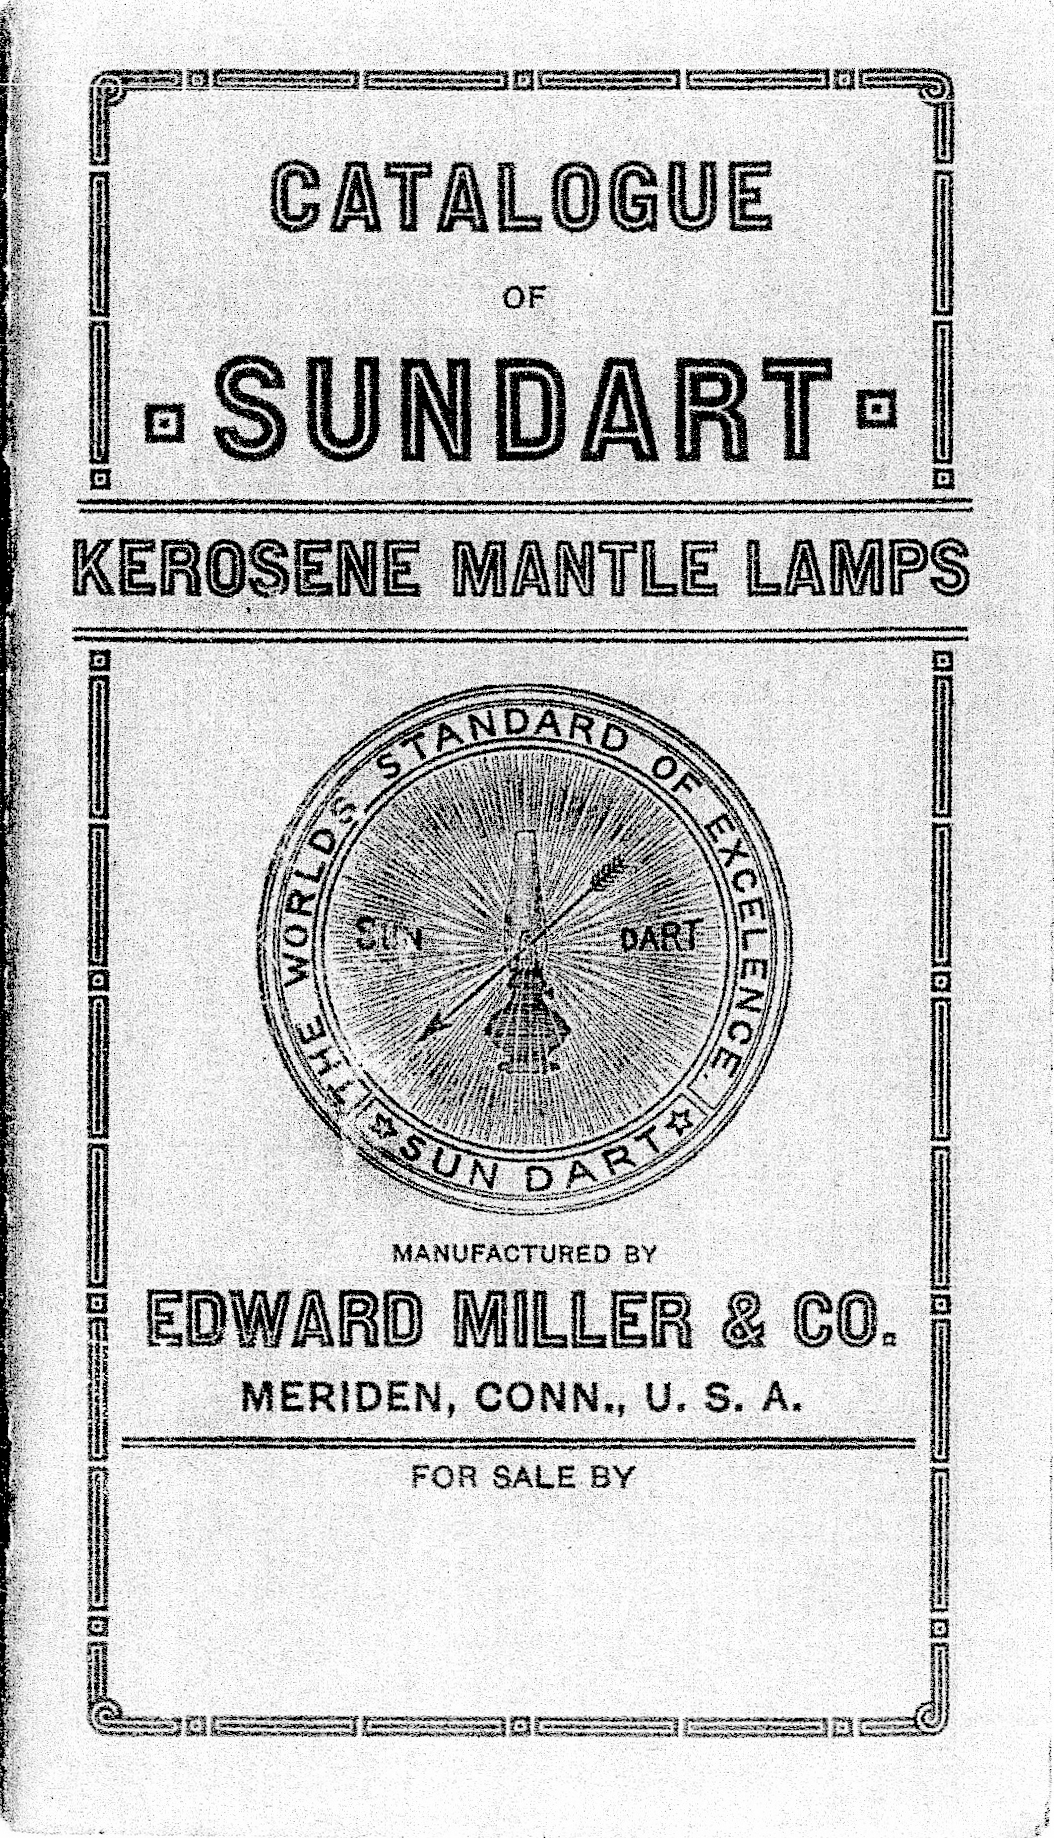 Sundart mantle lamp catalog cover page